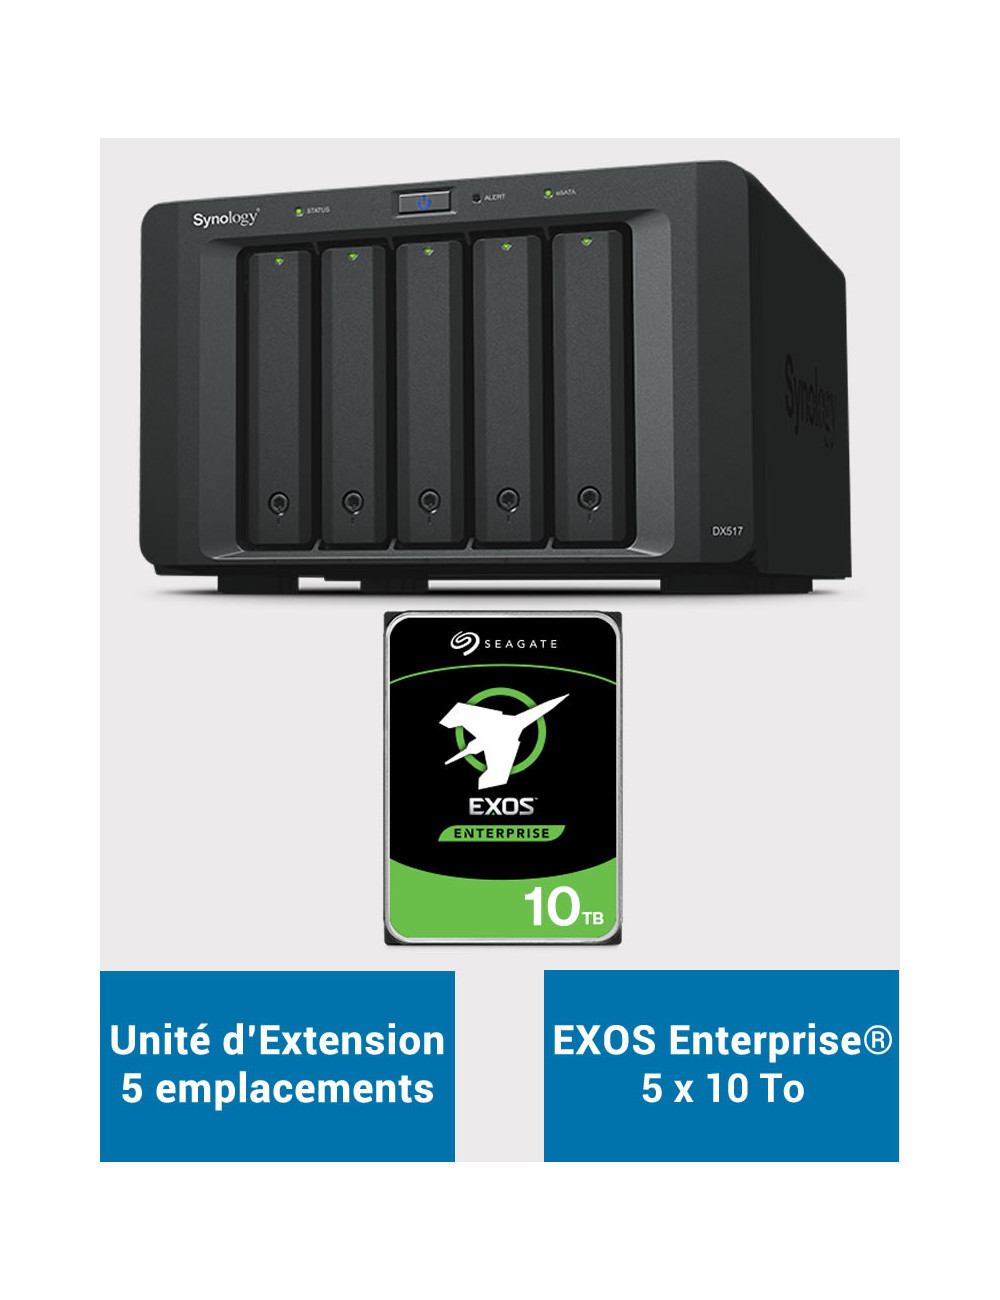 Synology DX517 Unité d'extension EXOS Enterprise 50To (5x10To)